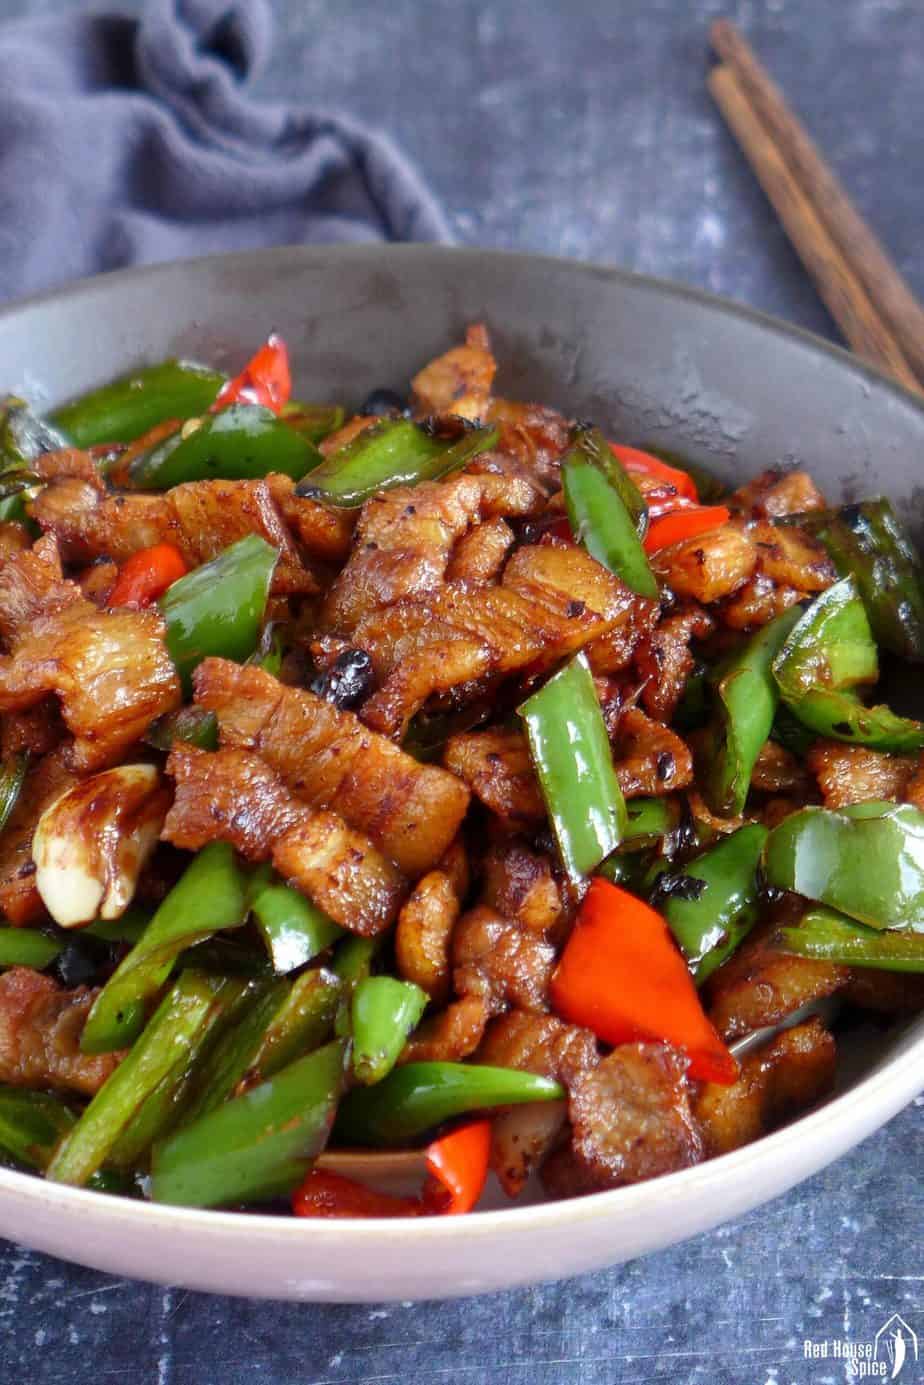 Hunan pork stir-fry